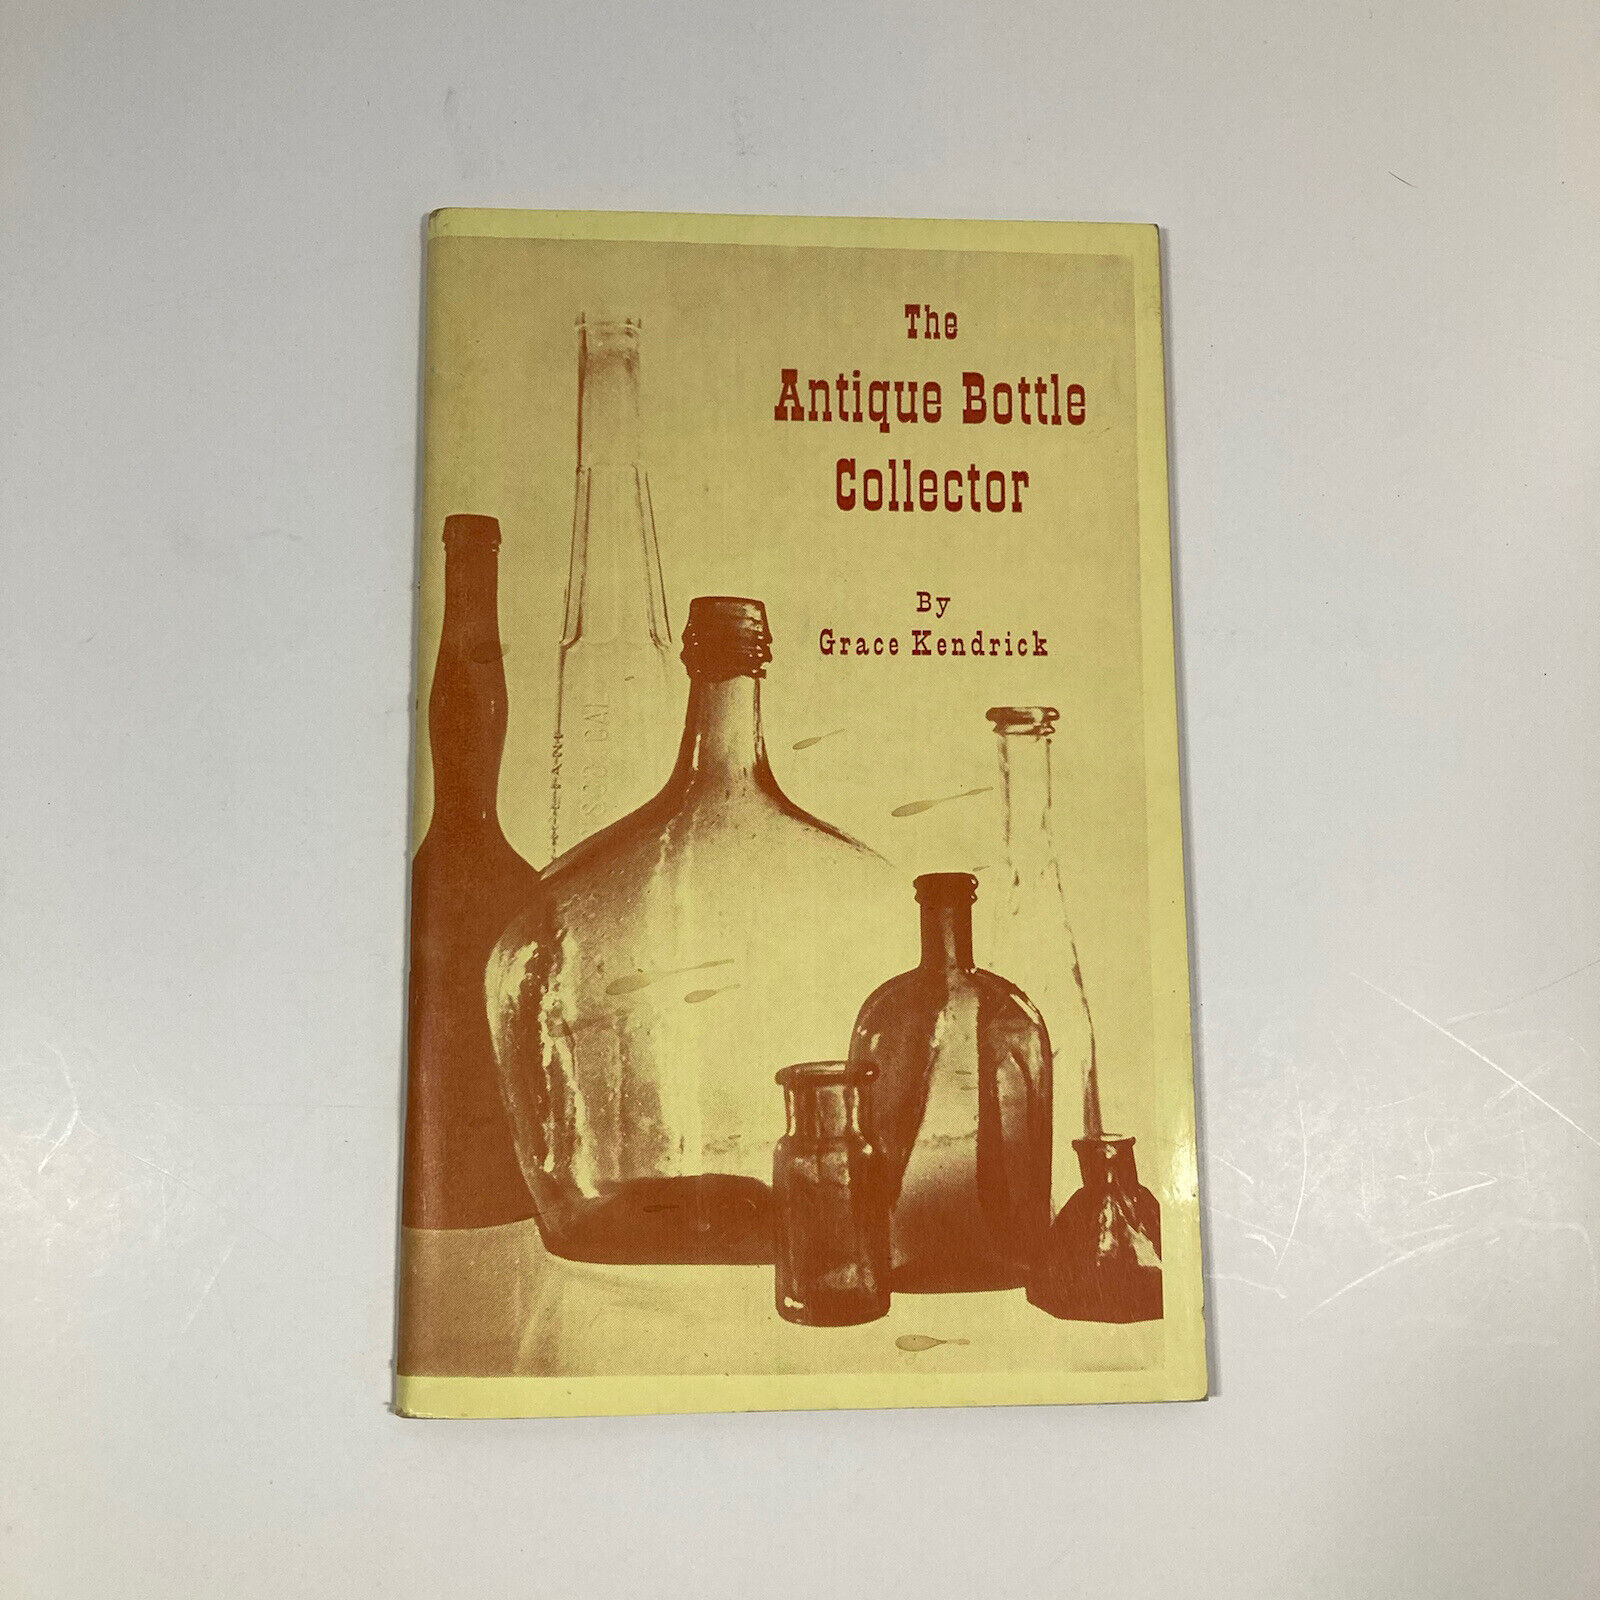 Vintage 1963 Pamphlet The Antique Bottle Collector by Grace Kendrick Signed